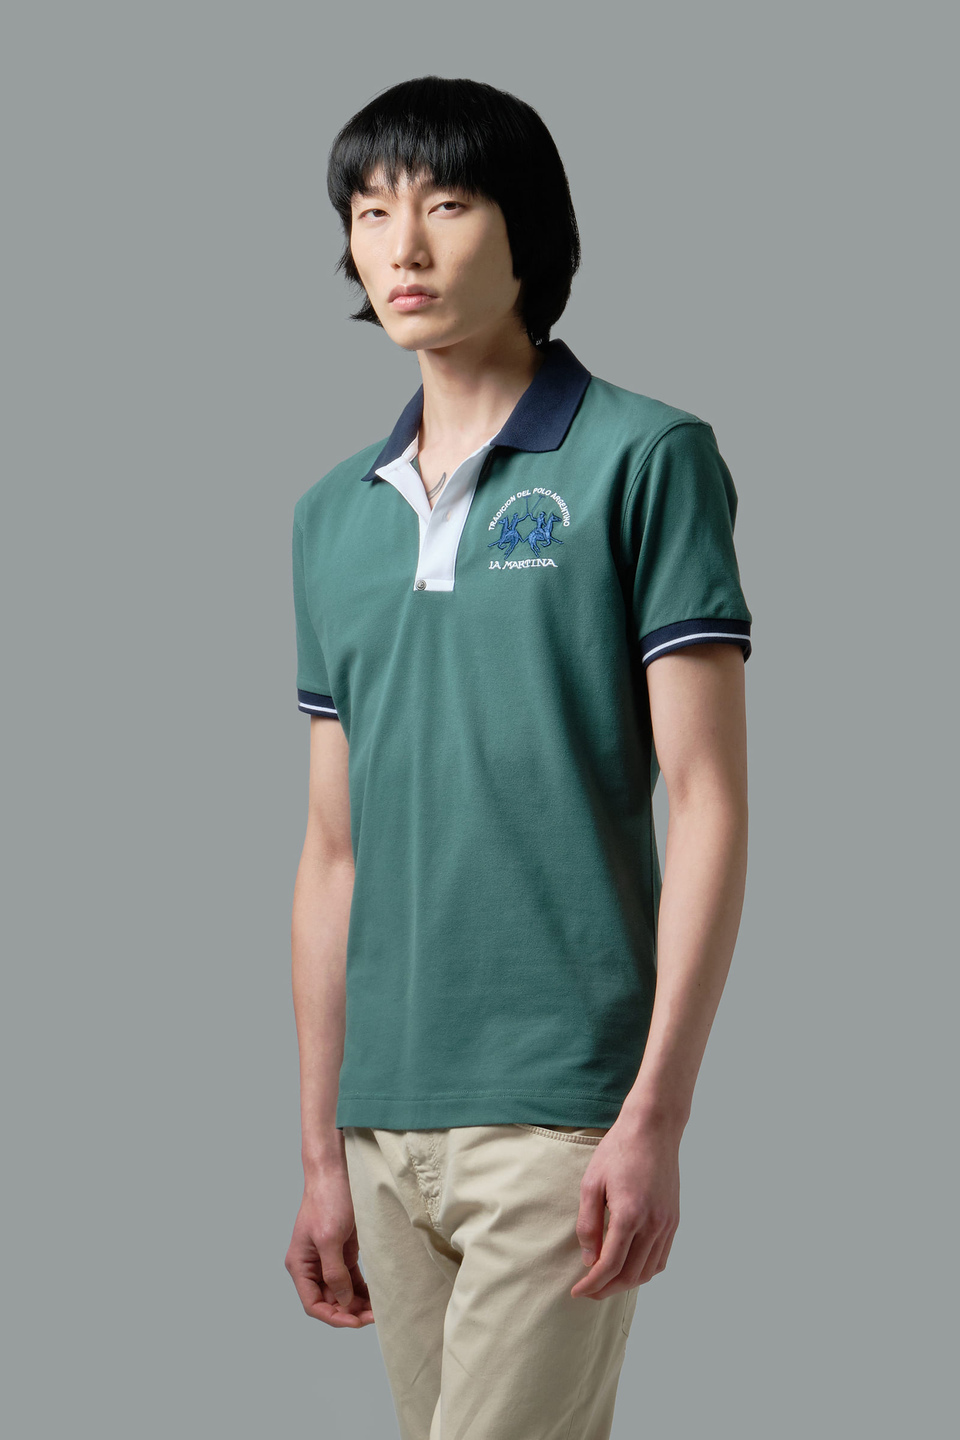 New Mens Pique Polo Shirt Short Sleeve Summer Colours Cotton T Shirt Top S-5XL